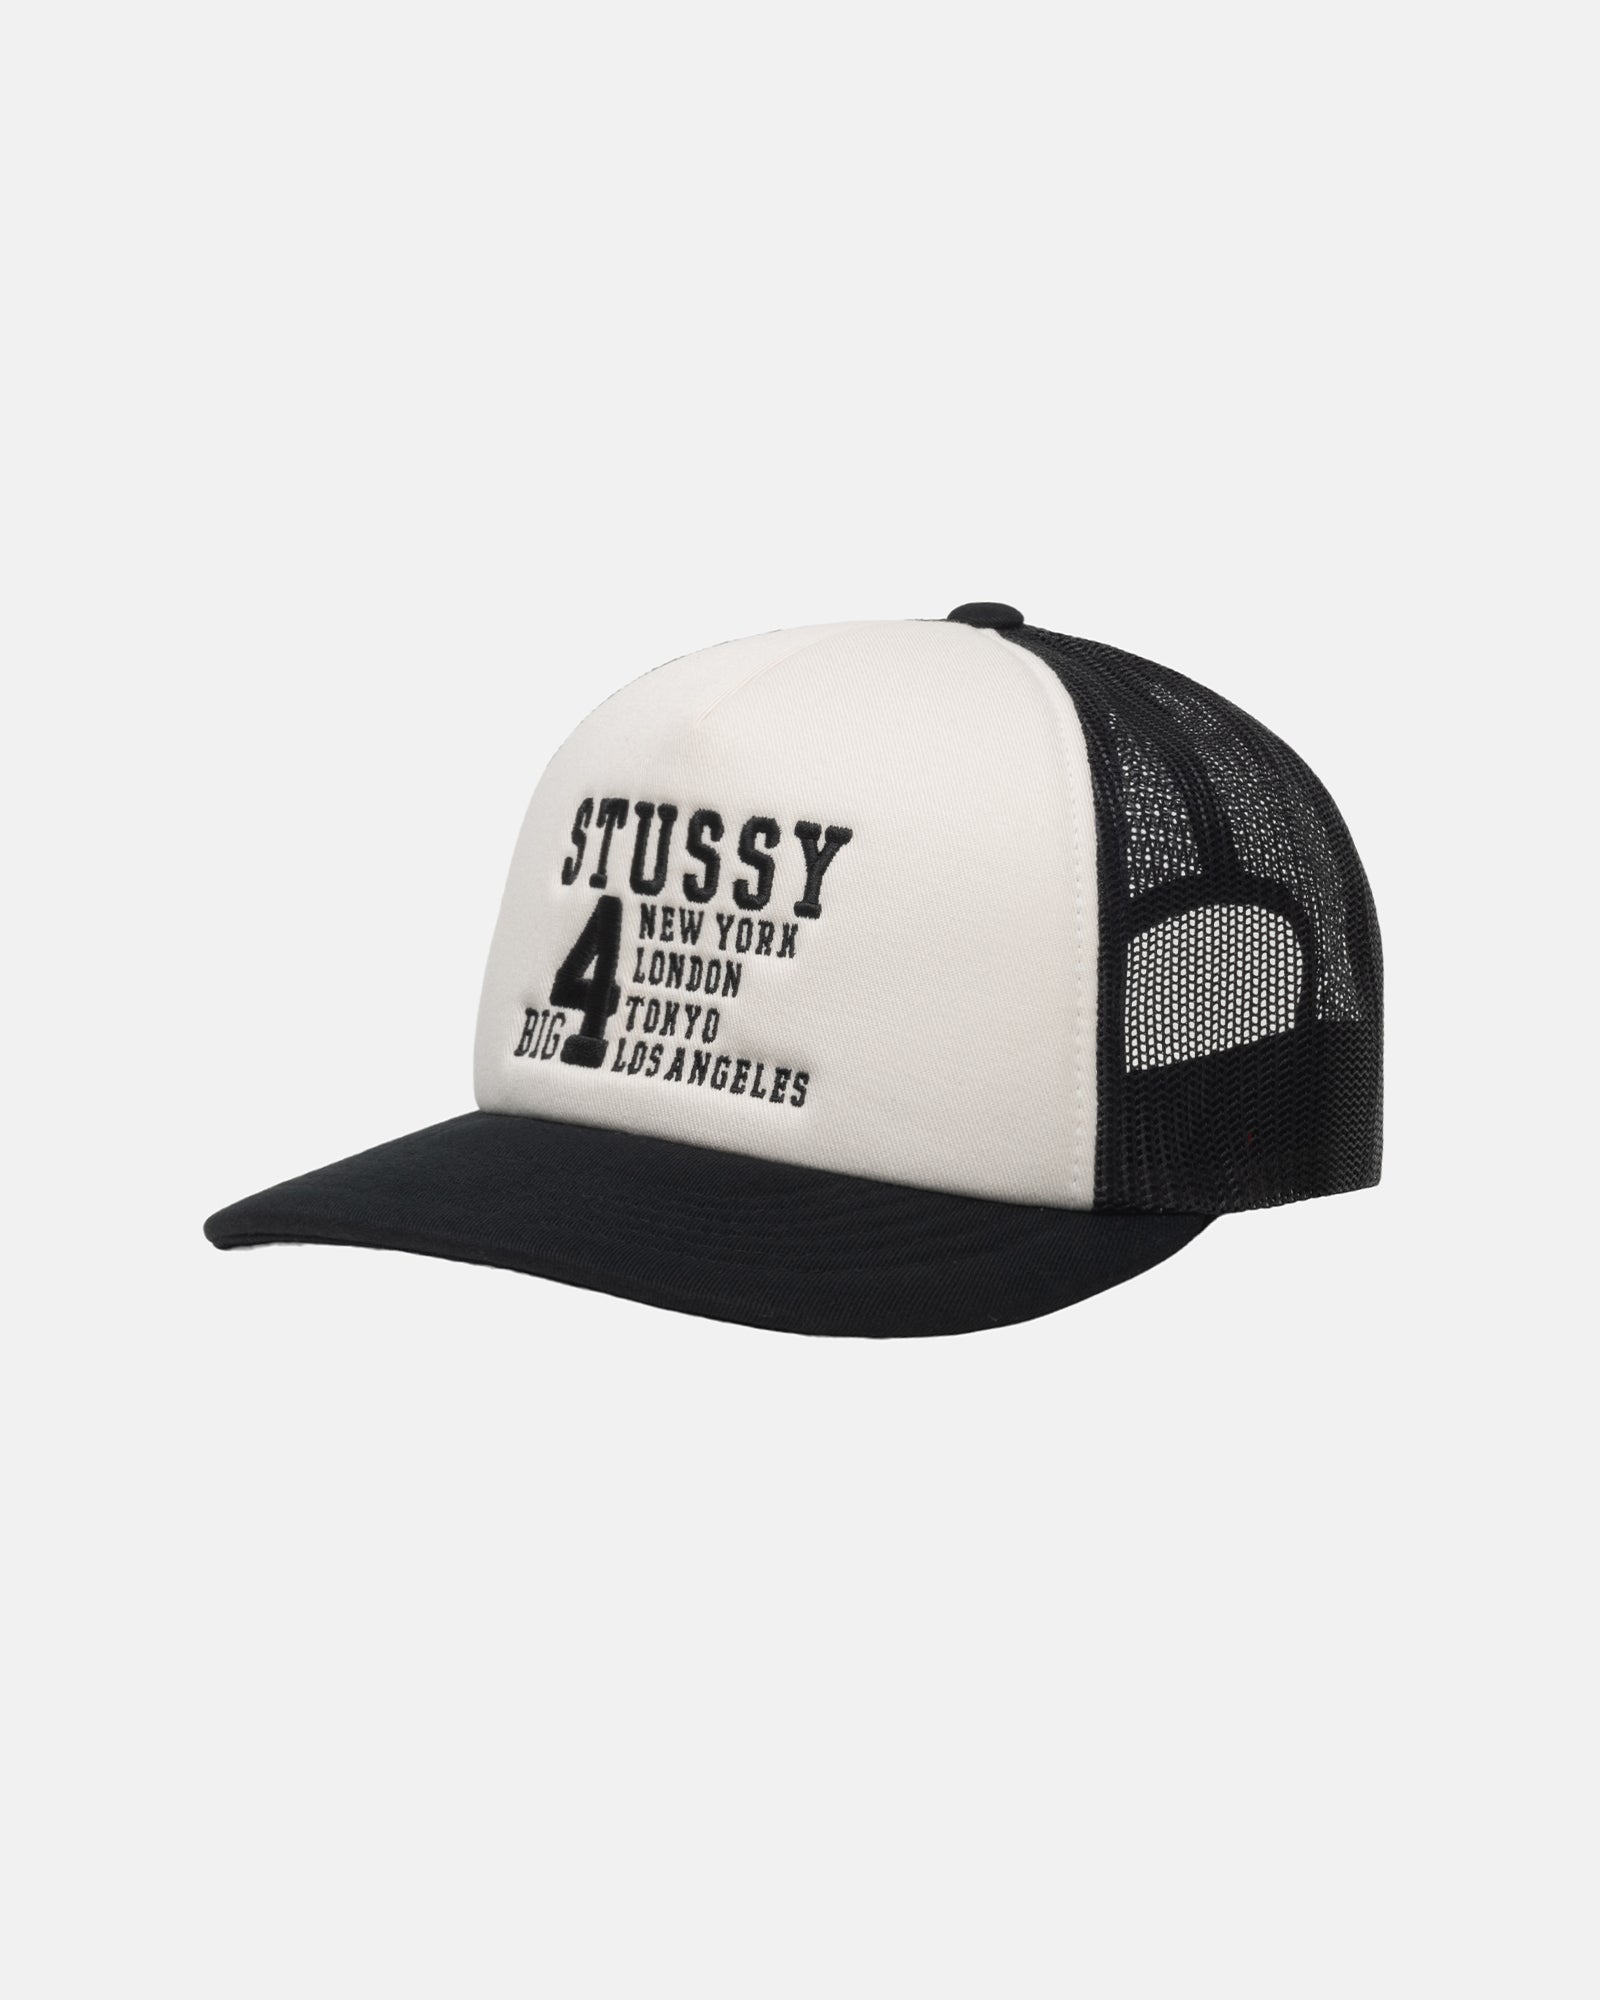 stussy TRUCKER BIG 4 SNAPBACK cap 黒black